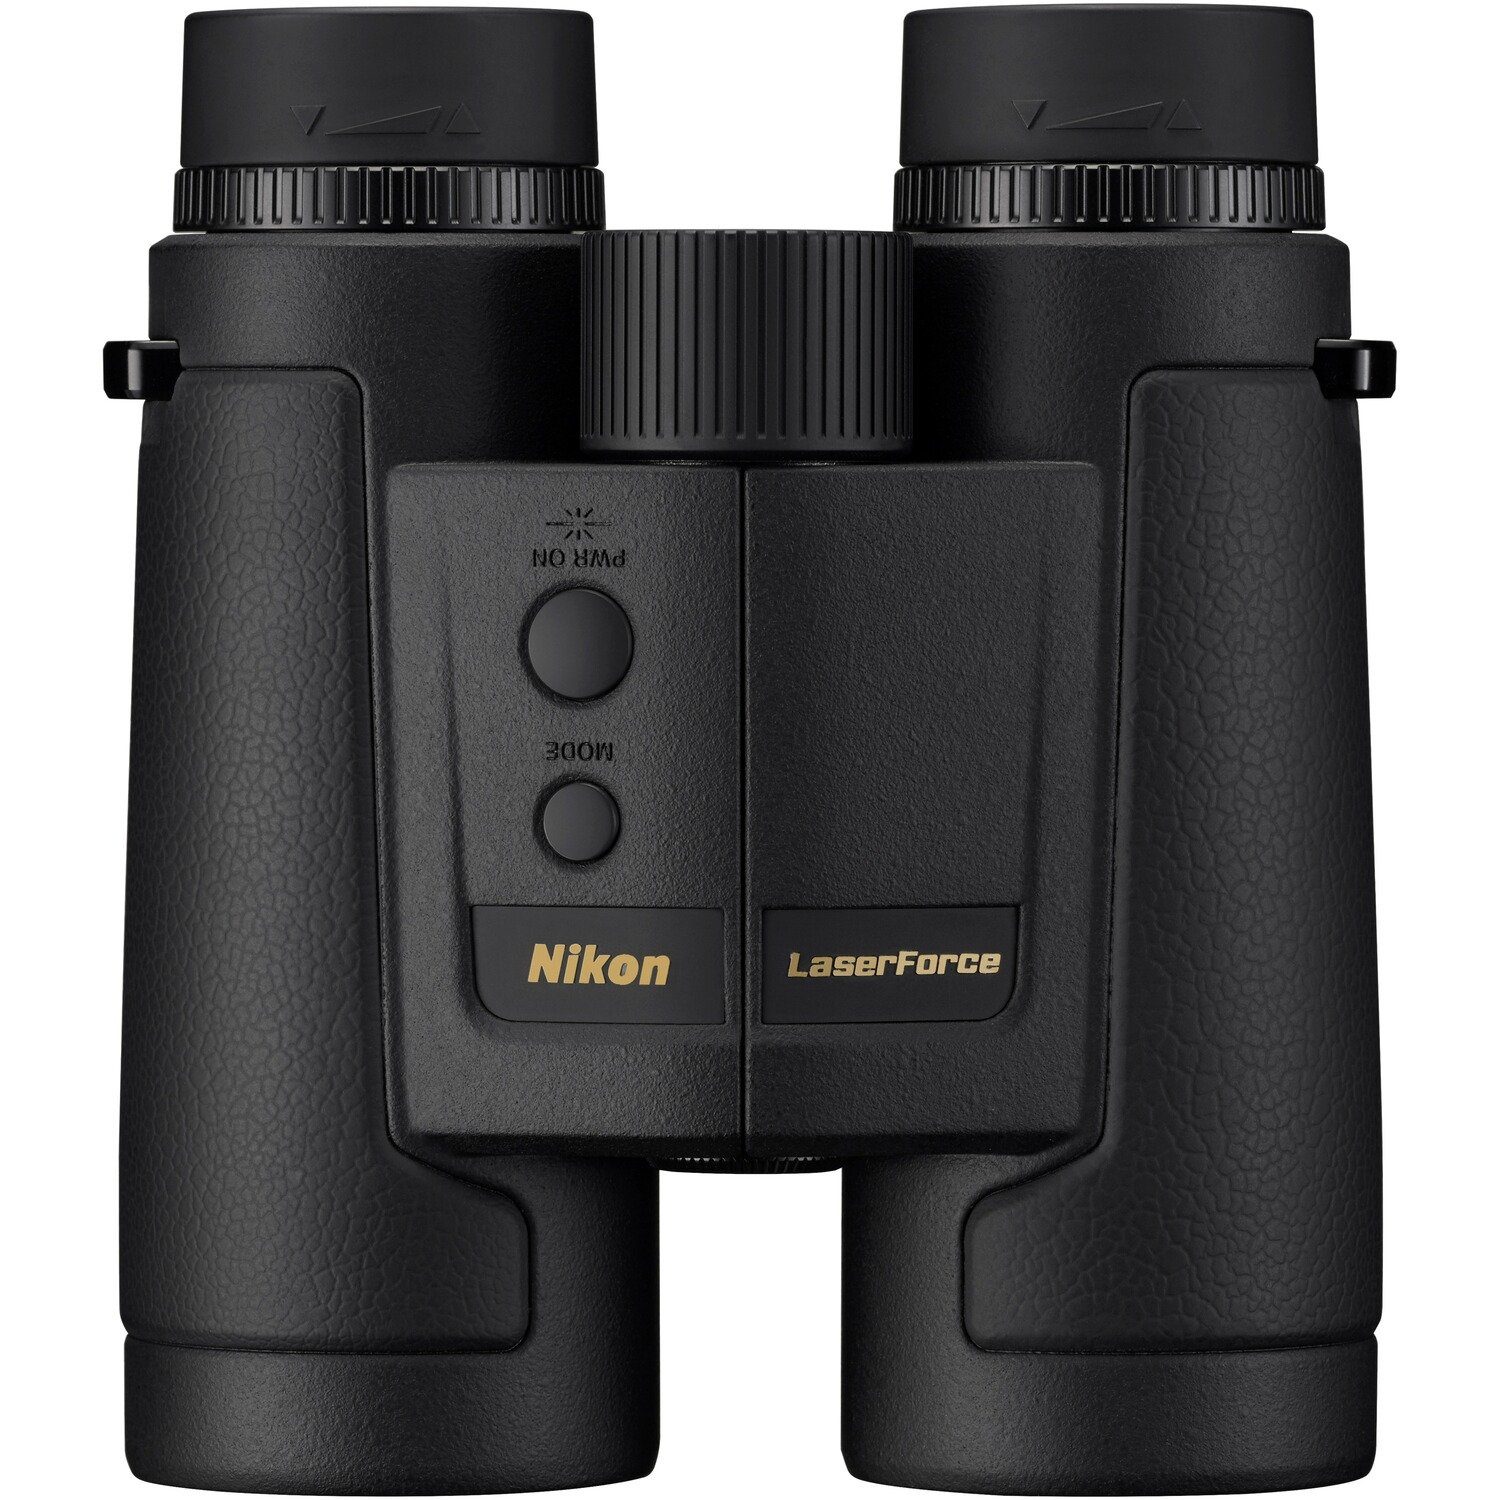 Nikon Fernglas mit Entfernungsmesser Fernglas 10x42 Laserforce